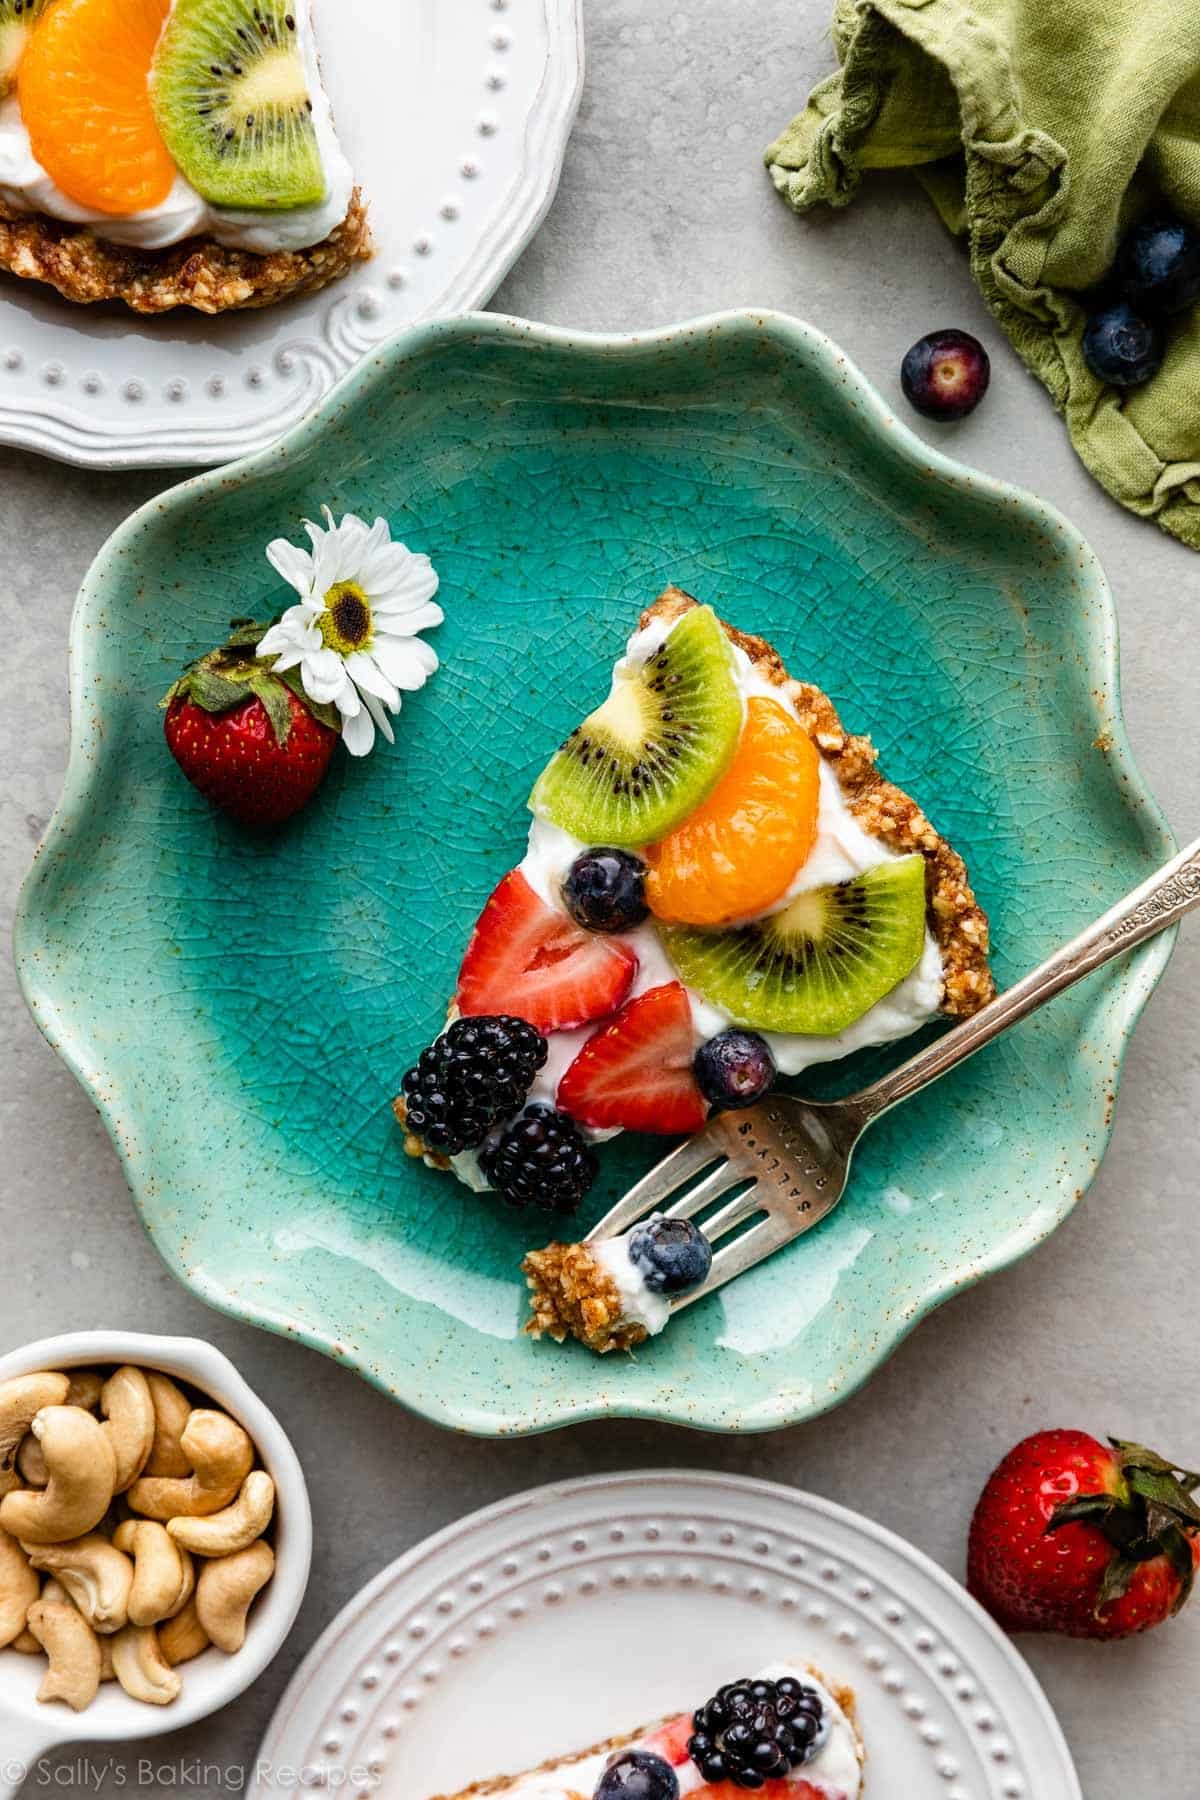 no bake Greek yogurt fruit tart slice with kiwi, mandarin orange, and berries on a blue plate with more slices on white plates around it.